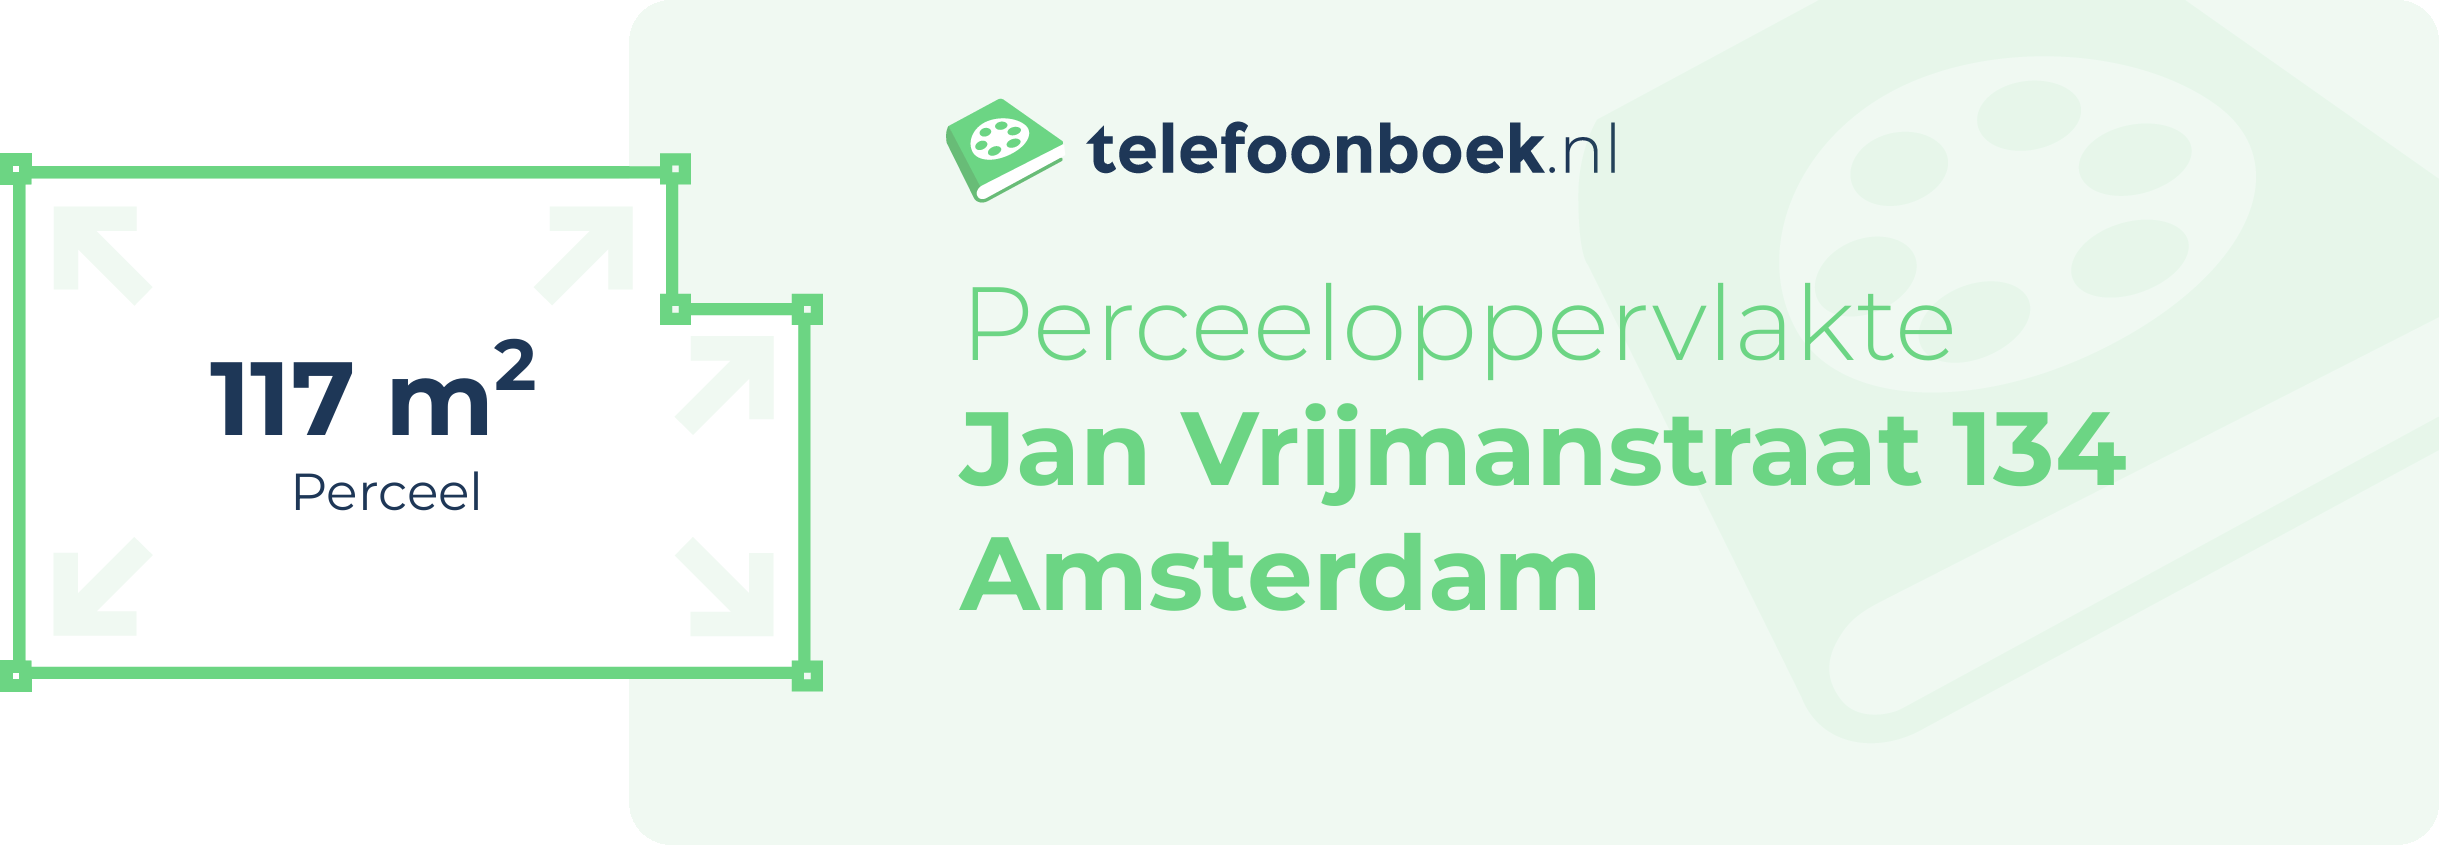 Perceeloppervlakte Jan Vrijmanstraat 134 Amsterdam